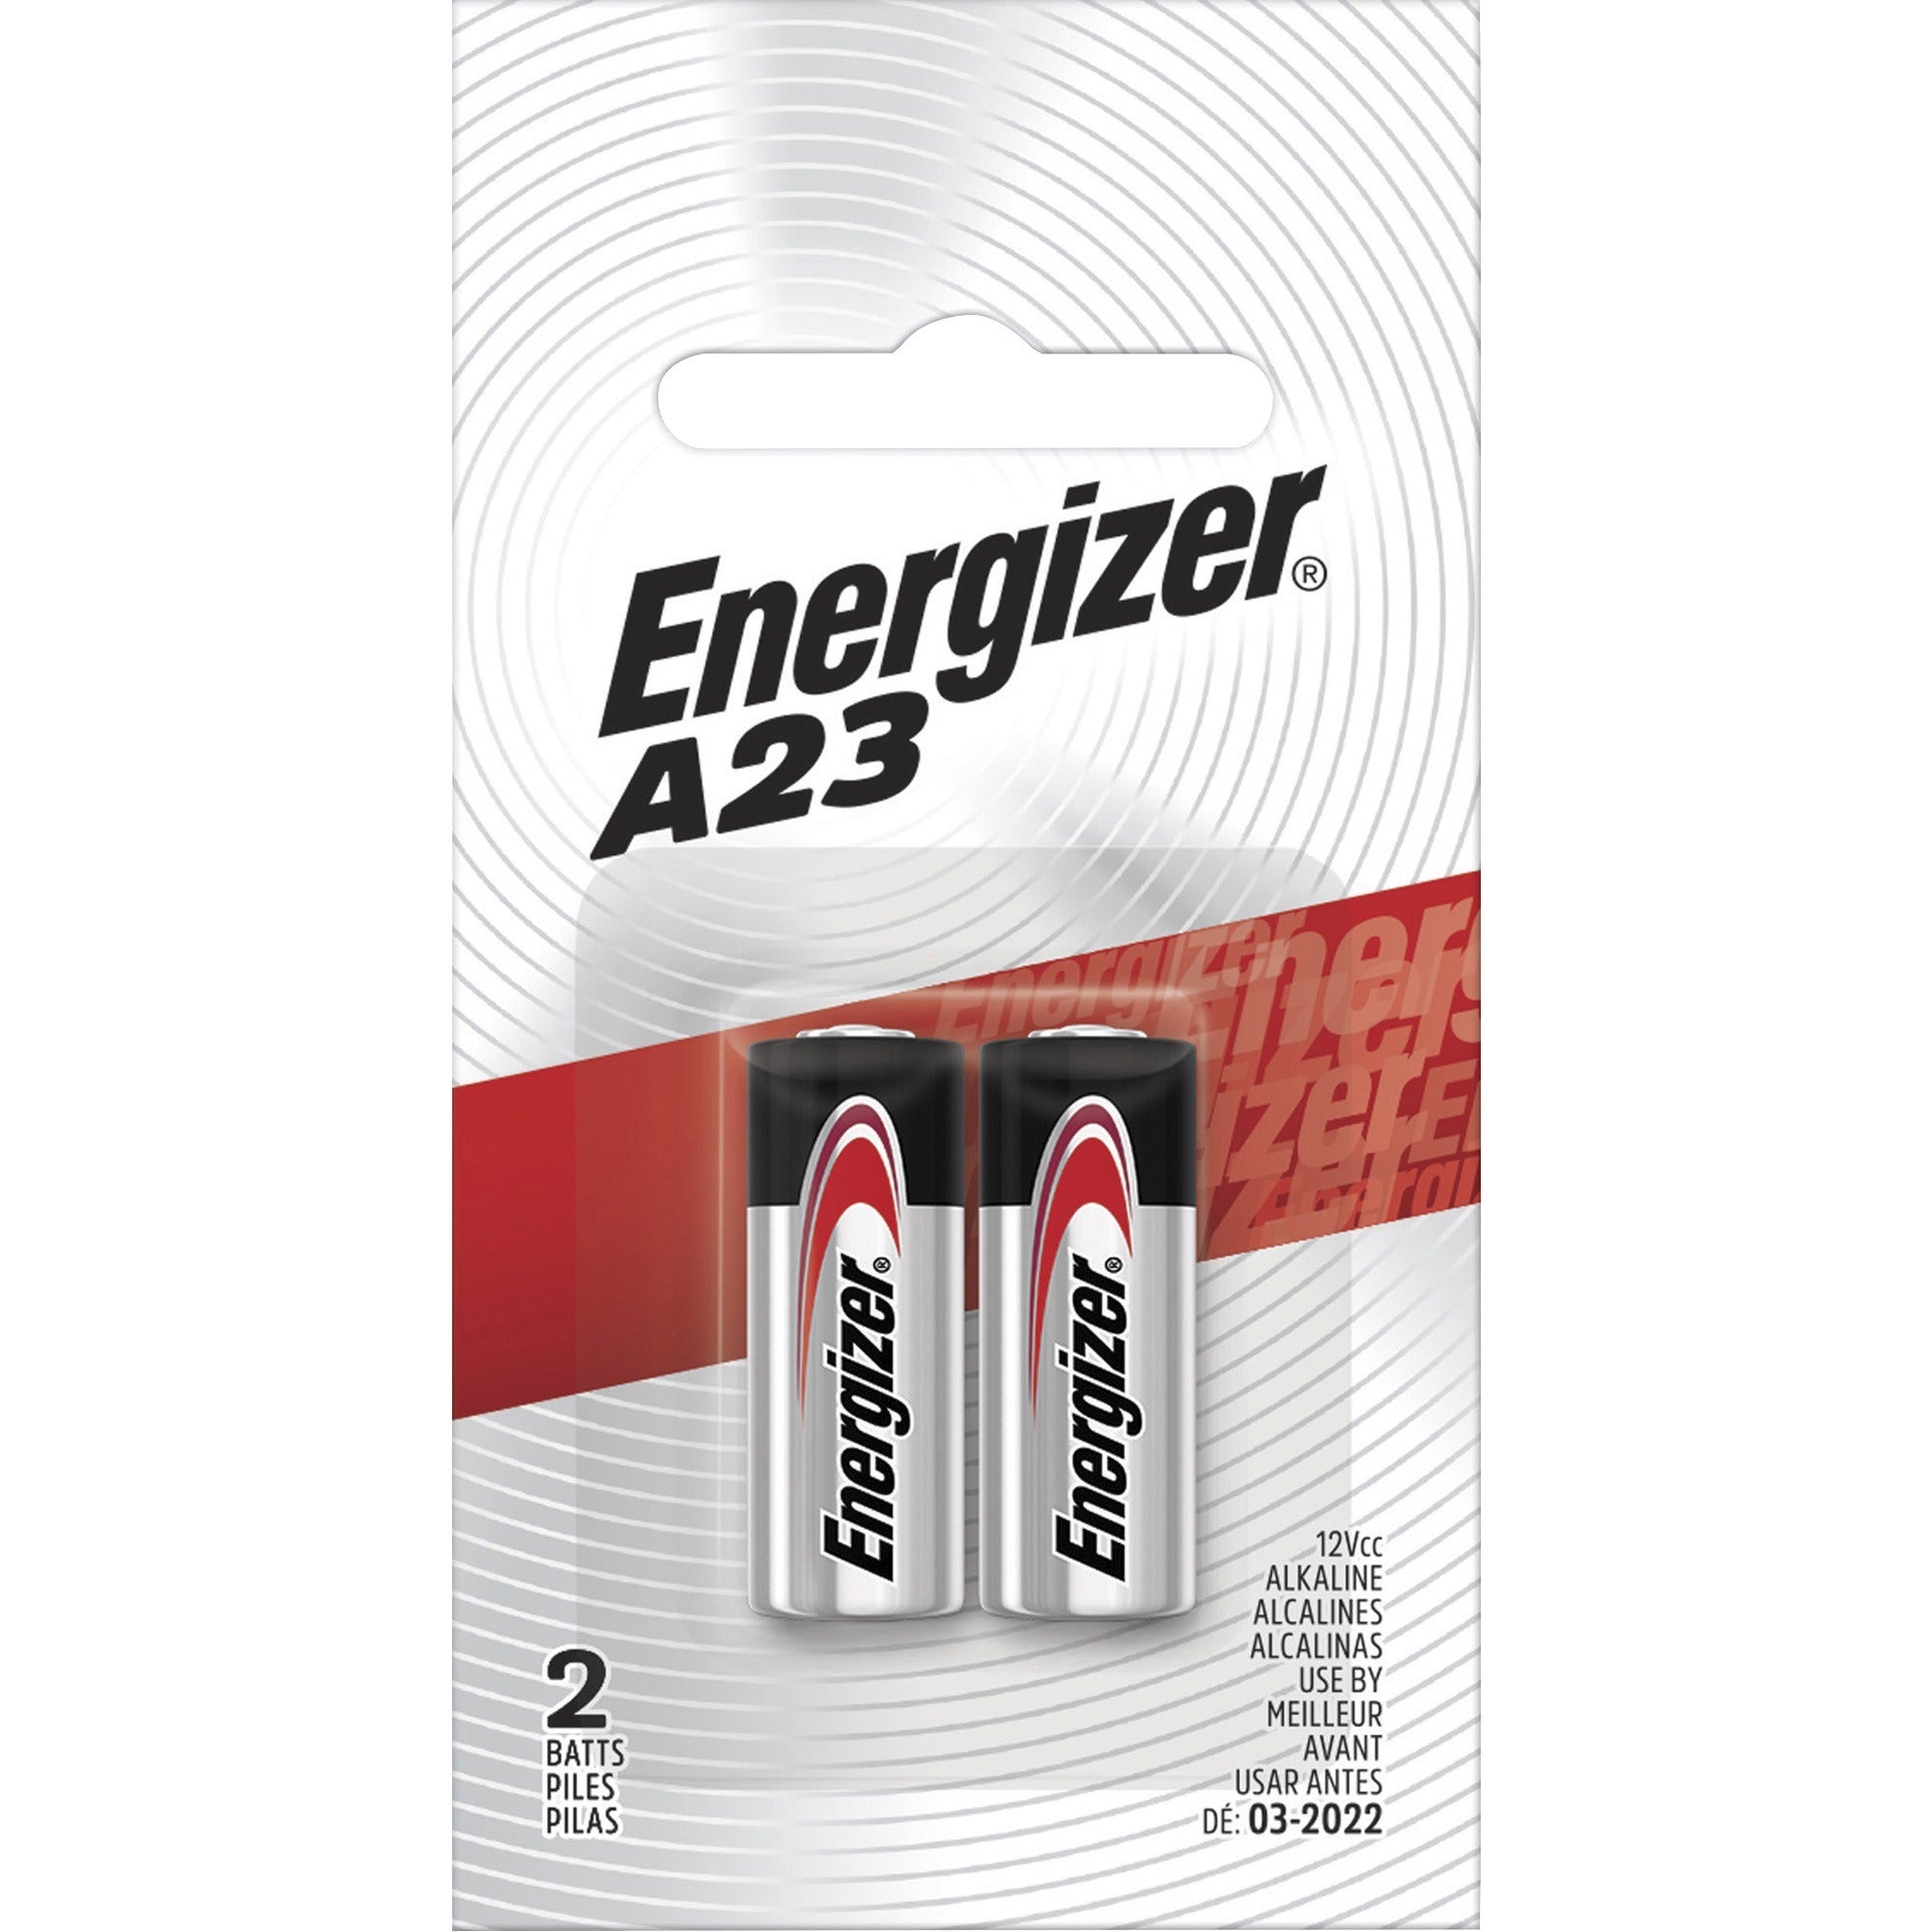 energizer-a23-batteries-2-pack-for-multipurpose-12-v-dc-alkaline-manganese-dioxide-2-pack_evea23bpz2 - 1